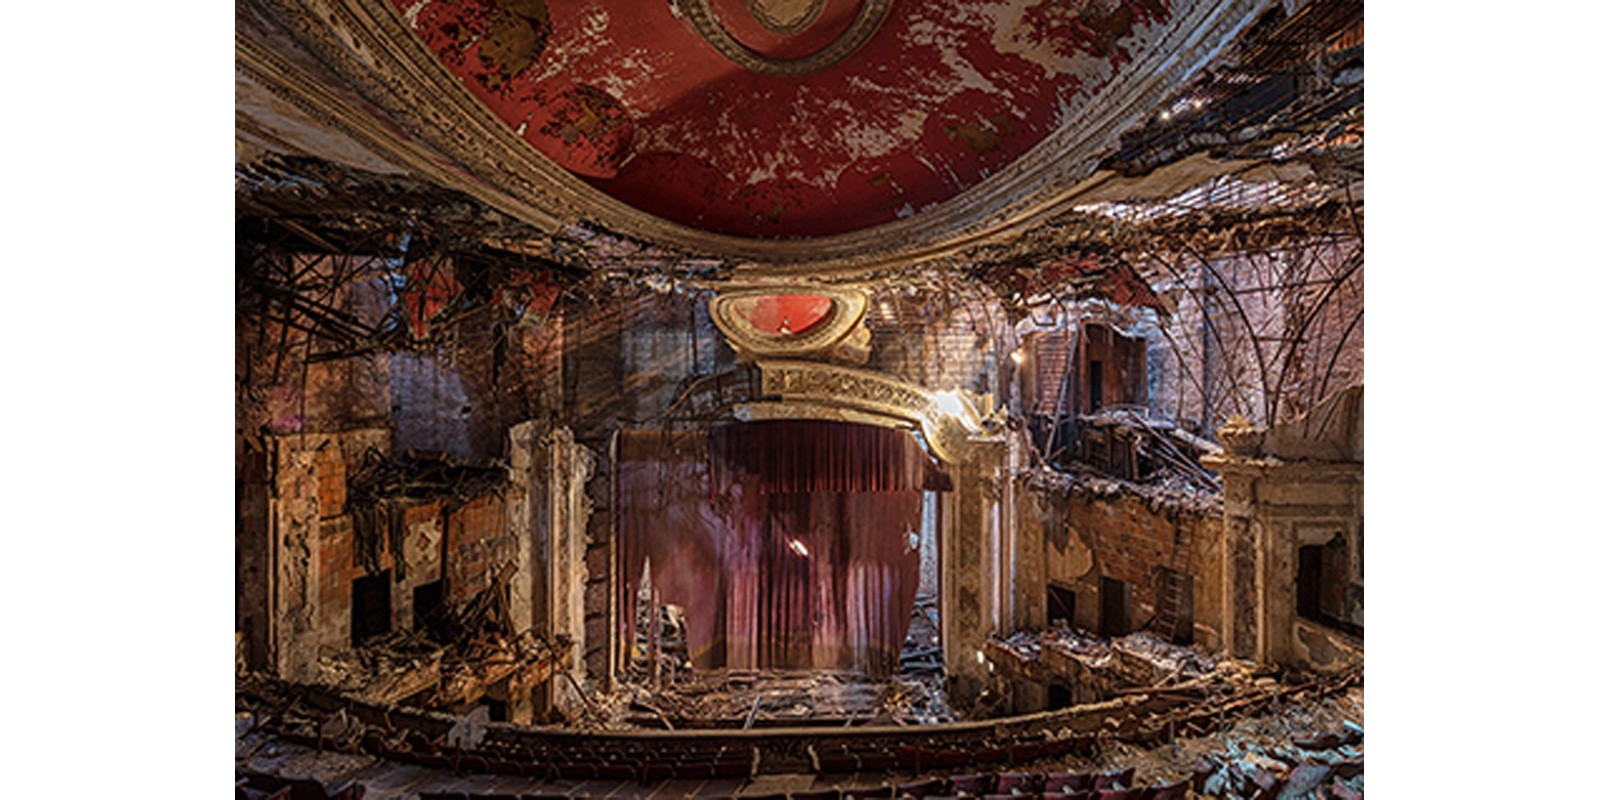 Richard Berenholtz - Abandoned Theatre, New Jersey (I)